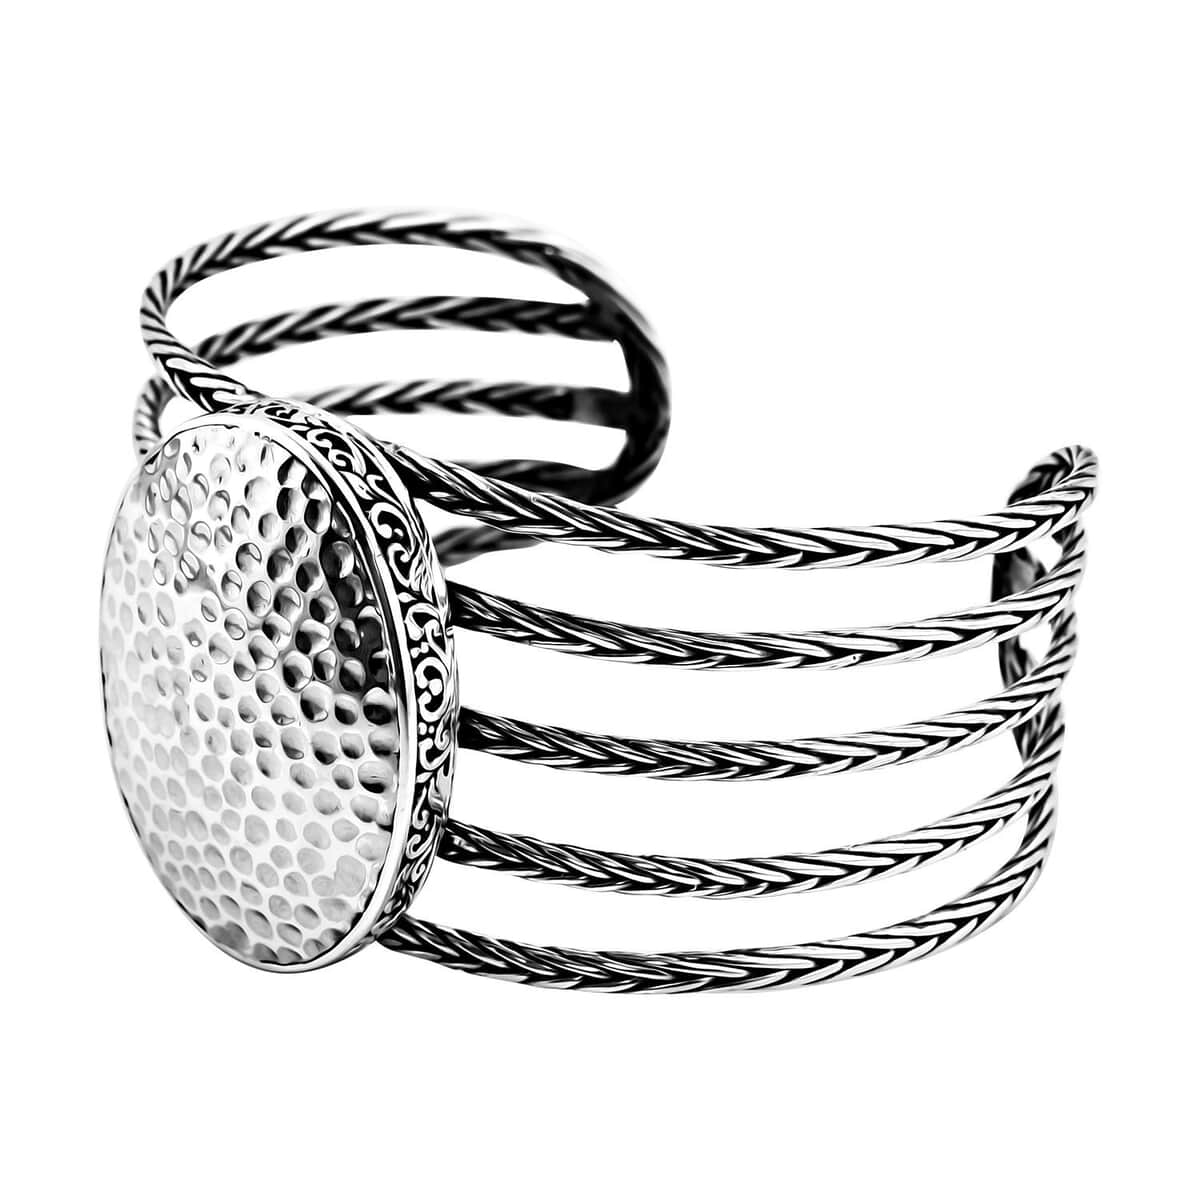 Bali Legacy Sterling Silver Cuff Bracelet (7.25 In) 41.85 Grams image number 3